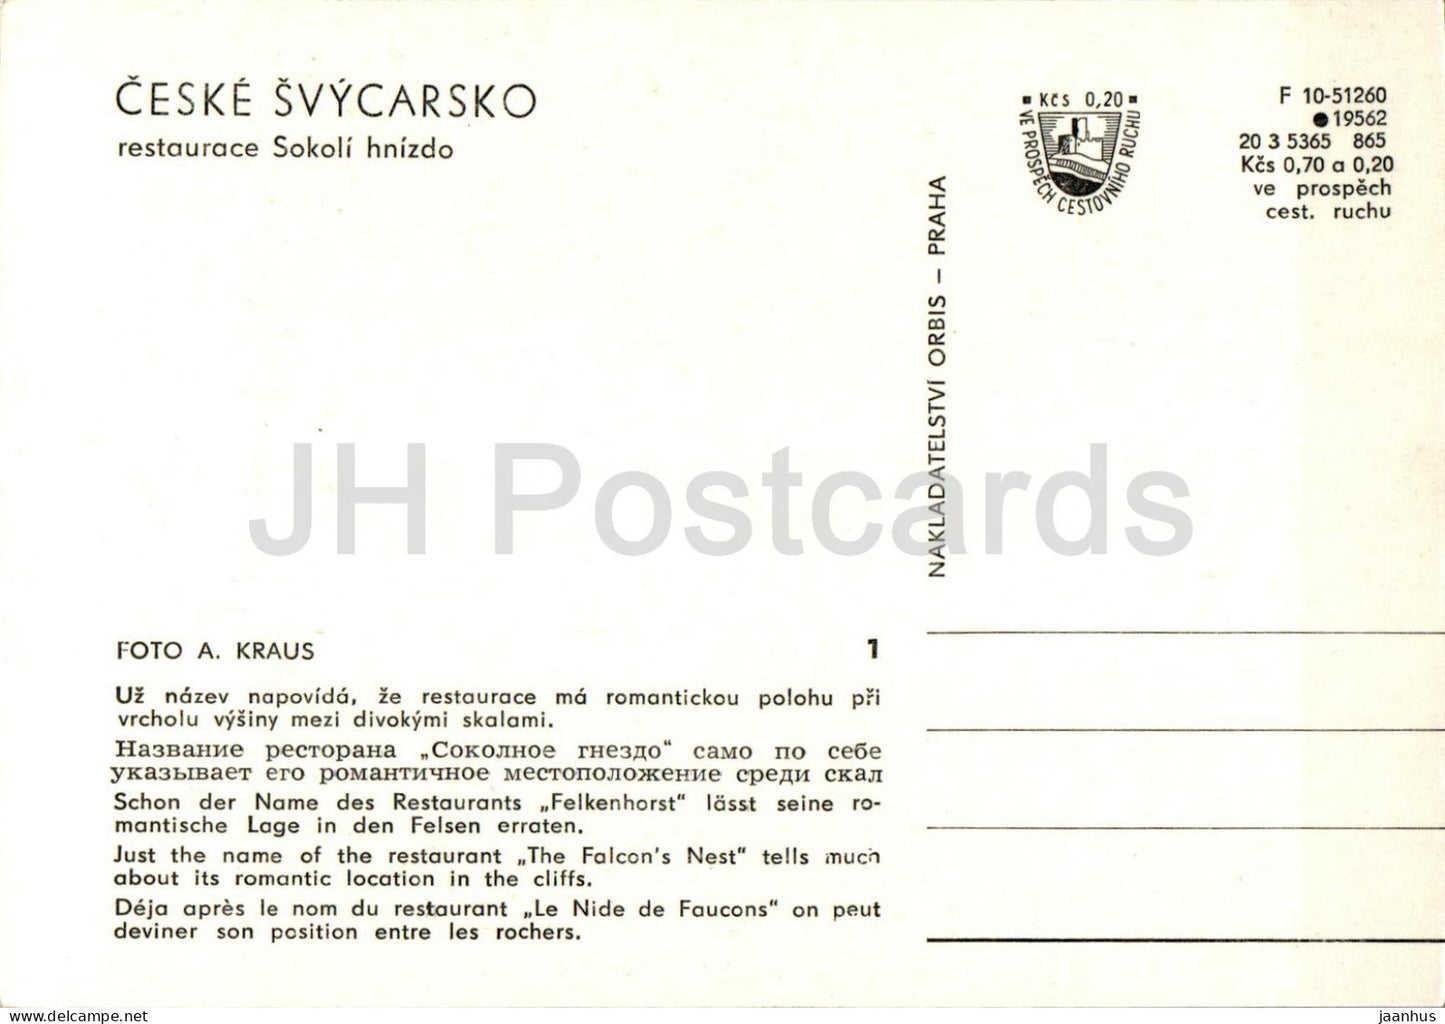 Ceske Svycarsko - restaurant Falcon's Nest - 1 - Czech Repubic - Czechoslovakia - unused